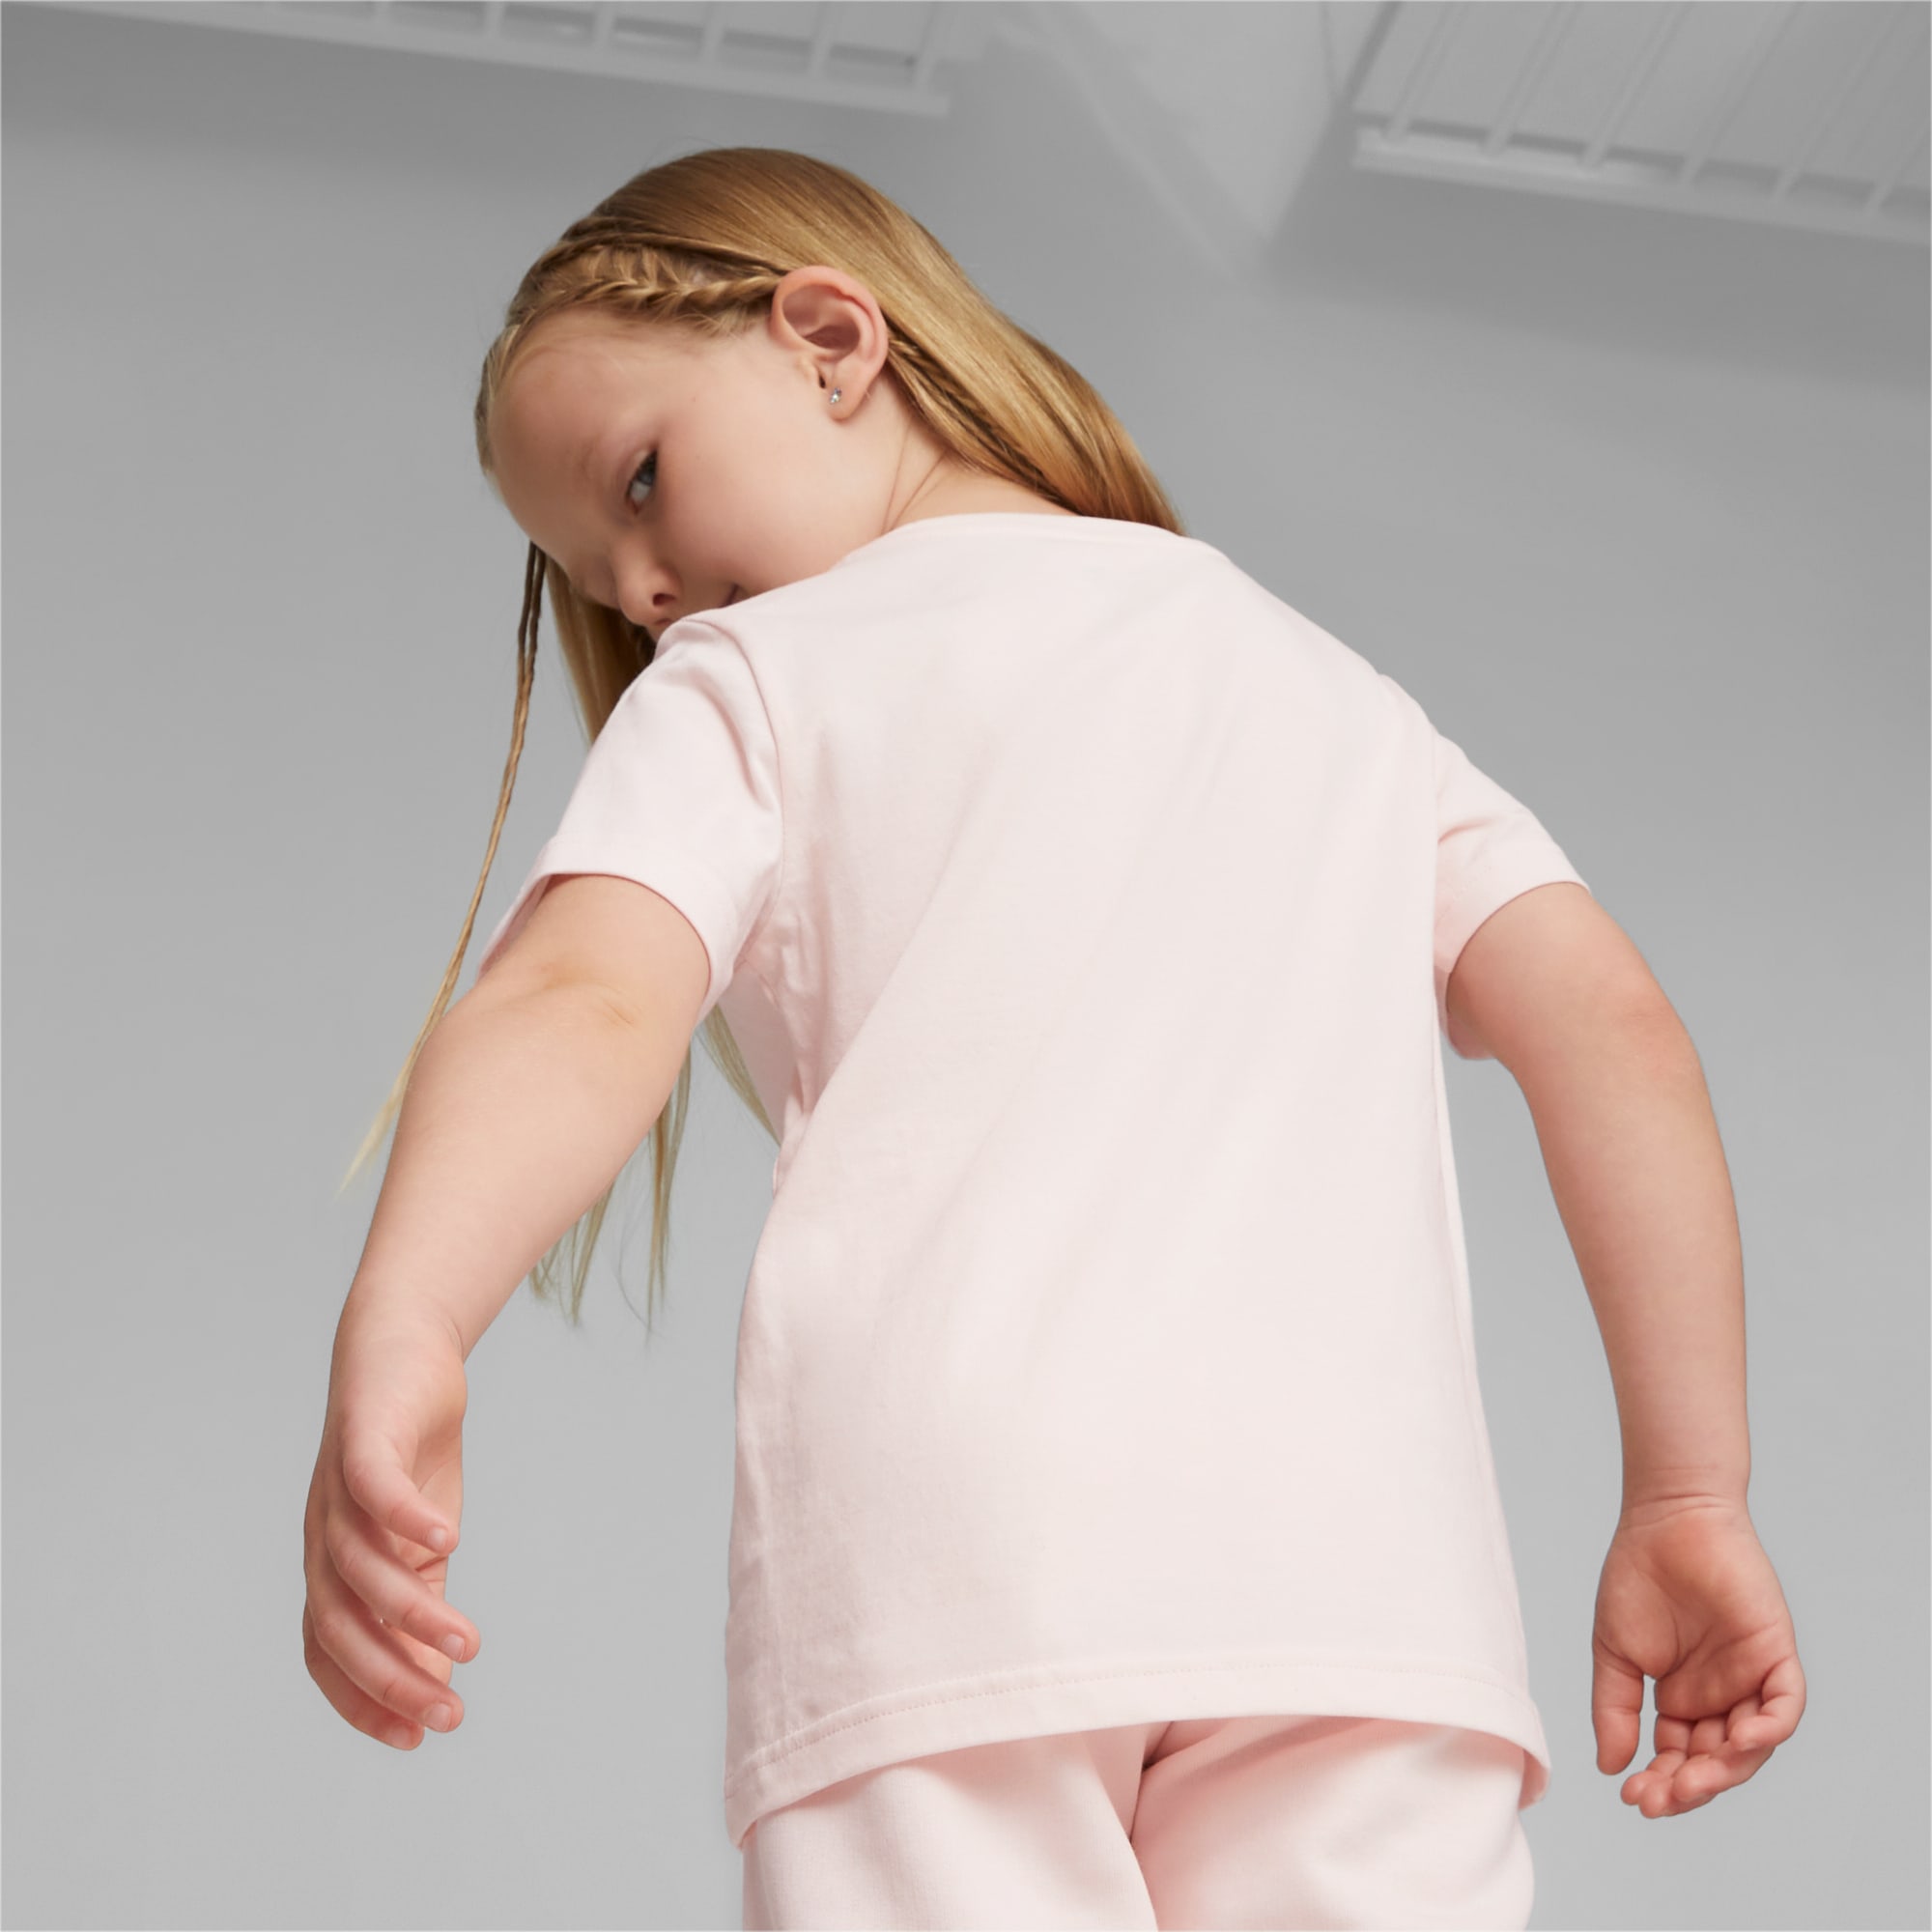 PUMA Essentials Mix Match Kids' T-Shirt, Frosty Pink, Size 92, Clothing